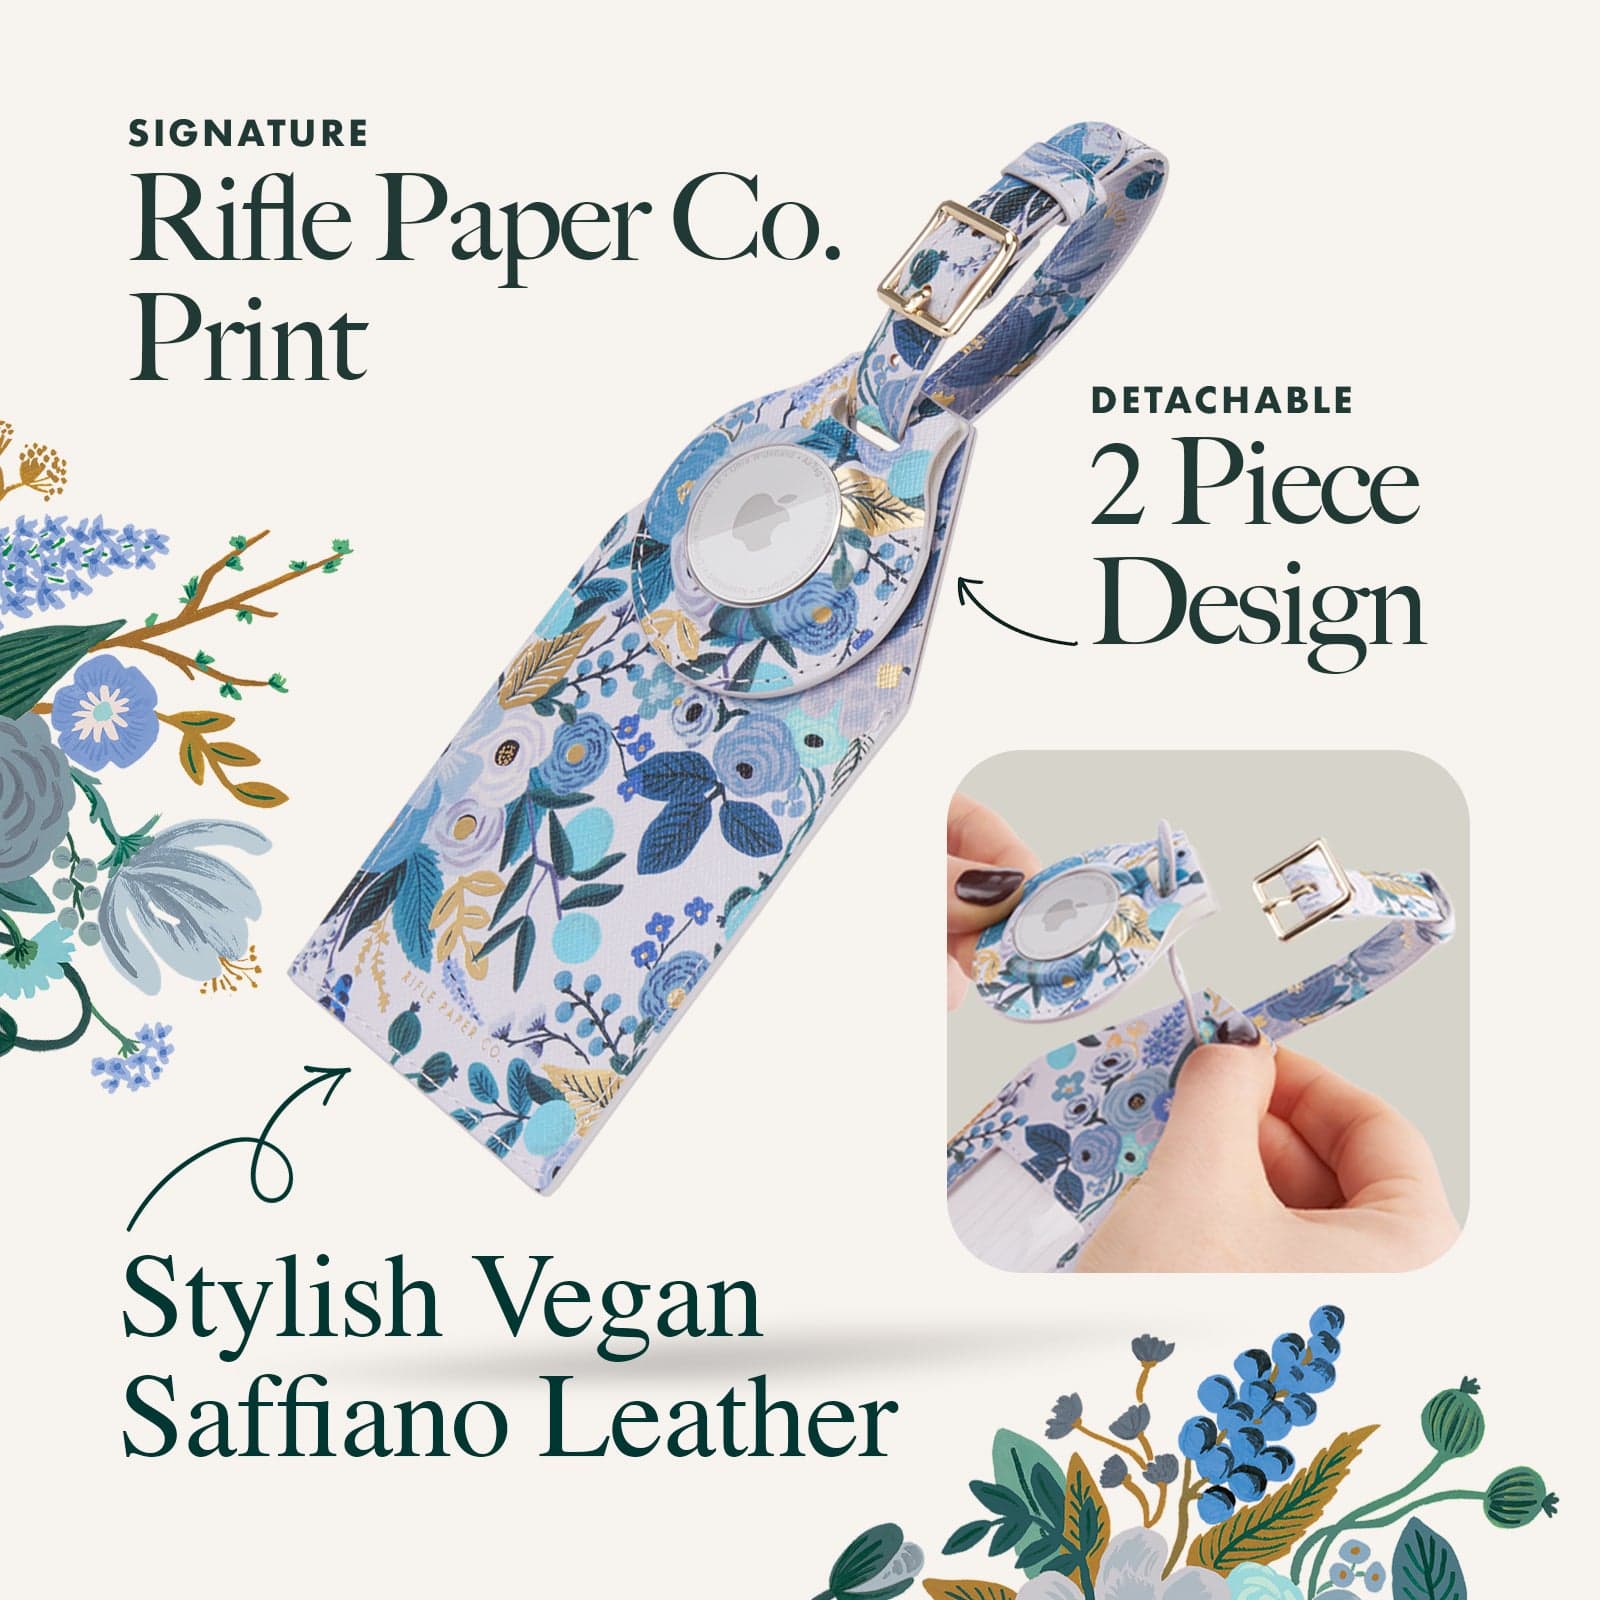 Signature Rifle Paper Co. Print. Detachable 2 Piece design. Stylish Vegan Saffiano Leather